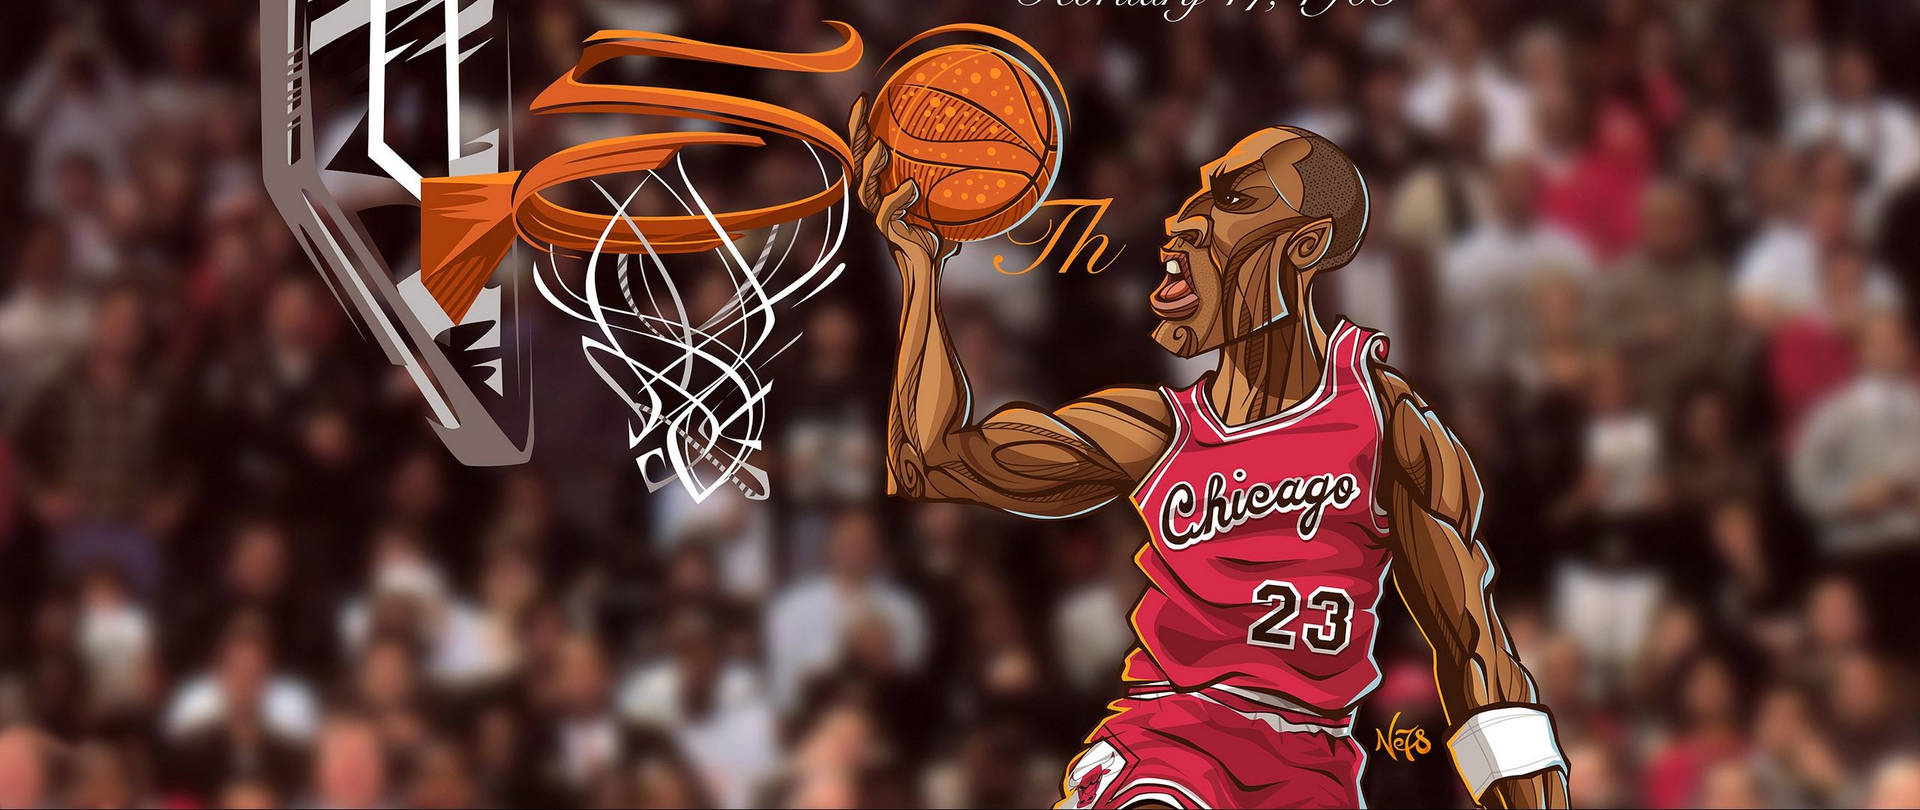 Michael Jordan Cartoon Art Picture